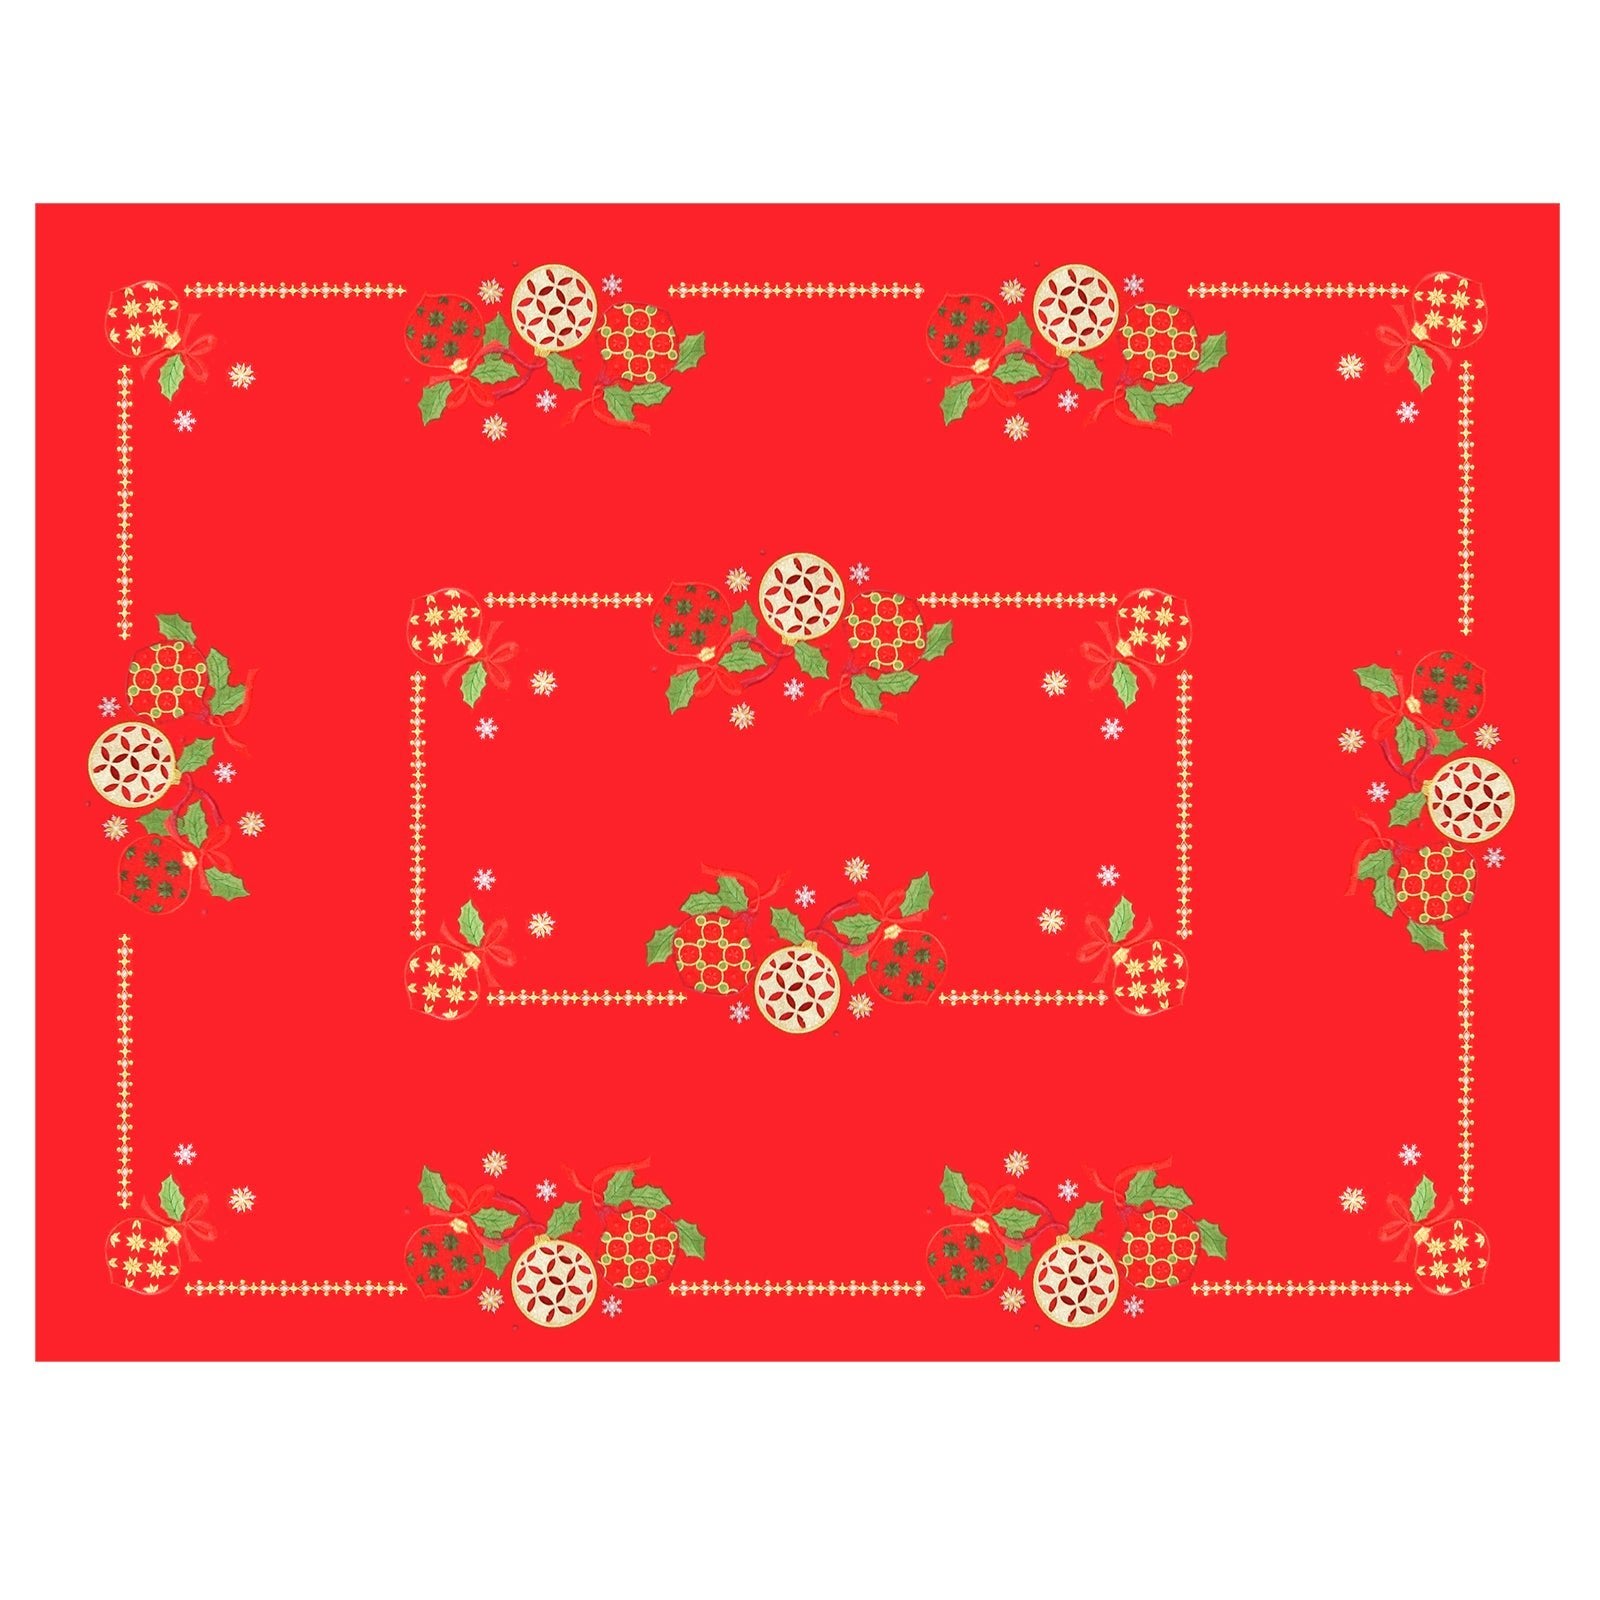 Mr Crimbo Christmas Baubles White Red Tablecloth Napkins - MrCrimbo.co.uk -XS6560 - Red -christmas napkins